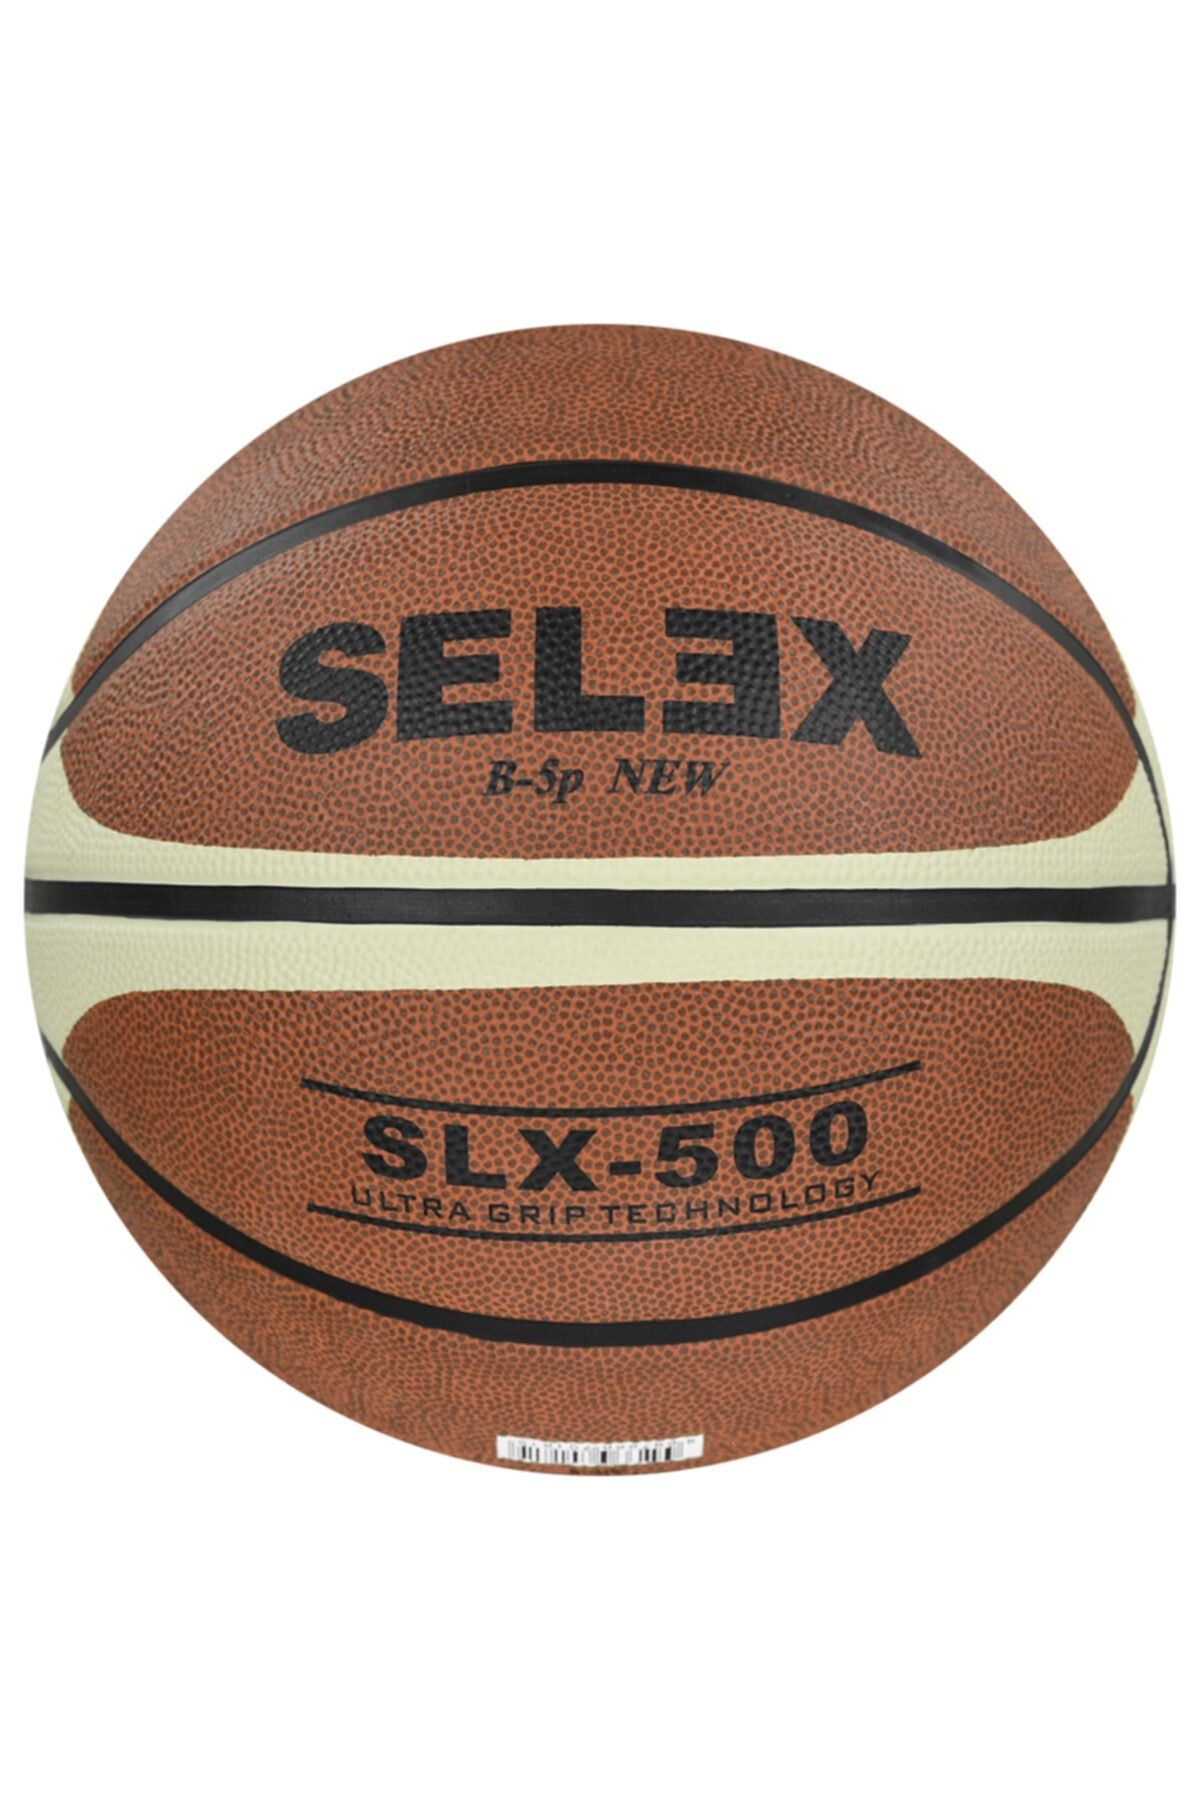 SELEX Basketbol Topu - SLX500